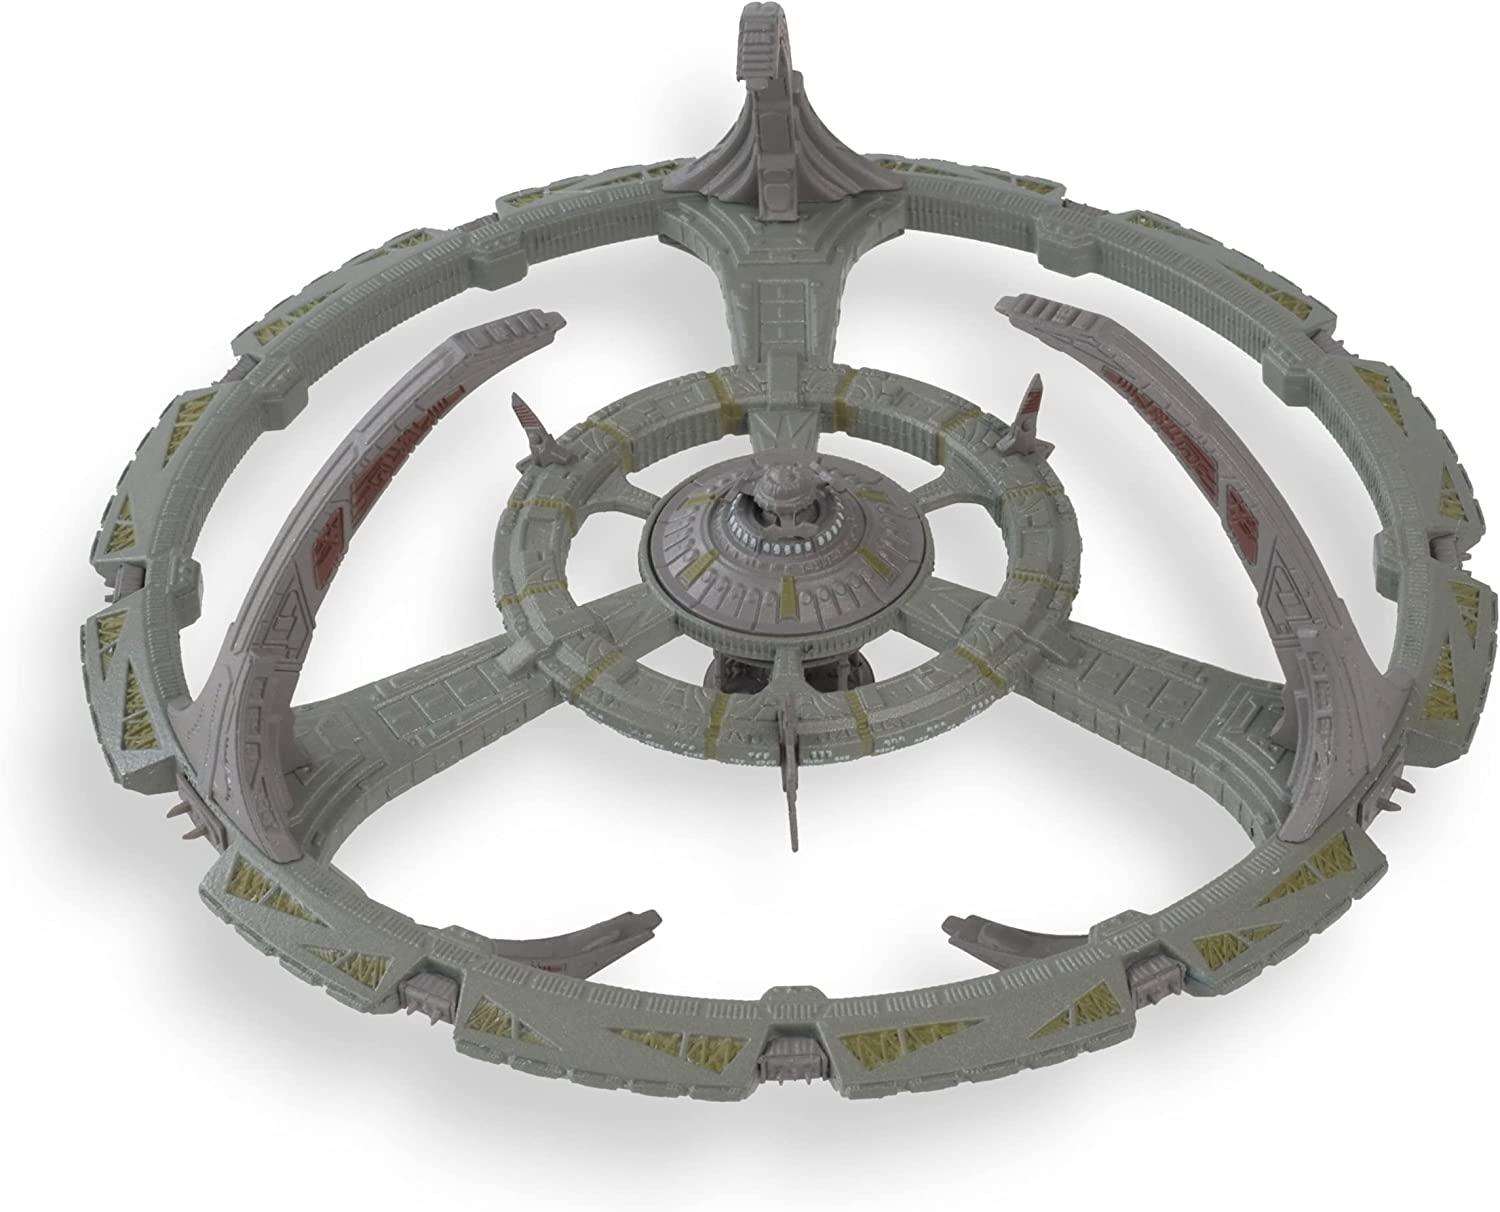 #01 Deep Space 9 DS9 Model Die-cast Ship SPECIAL ISSUE (Eaglemoss Star Trek)